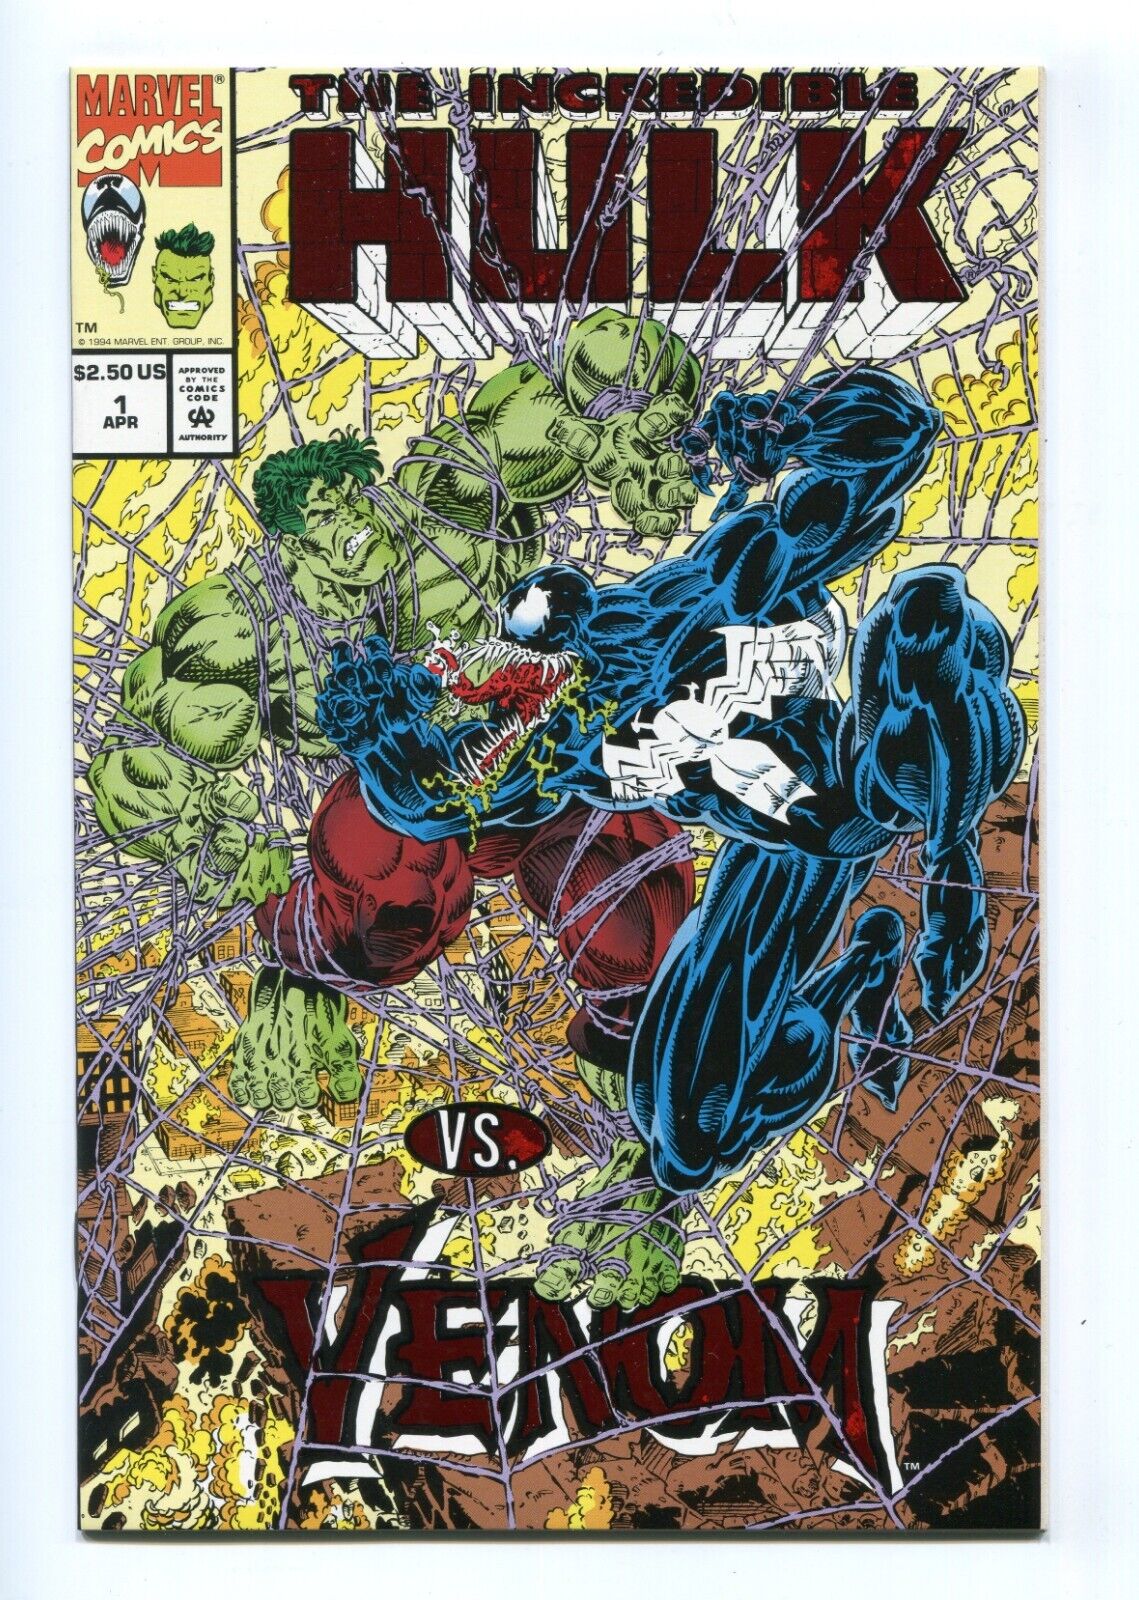 THE INCREDIBLE HULK VS VENOM #1 - MAIL-AWAY COMIC - FOIL COVER HIGH GRADE - 1994